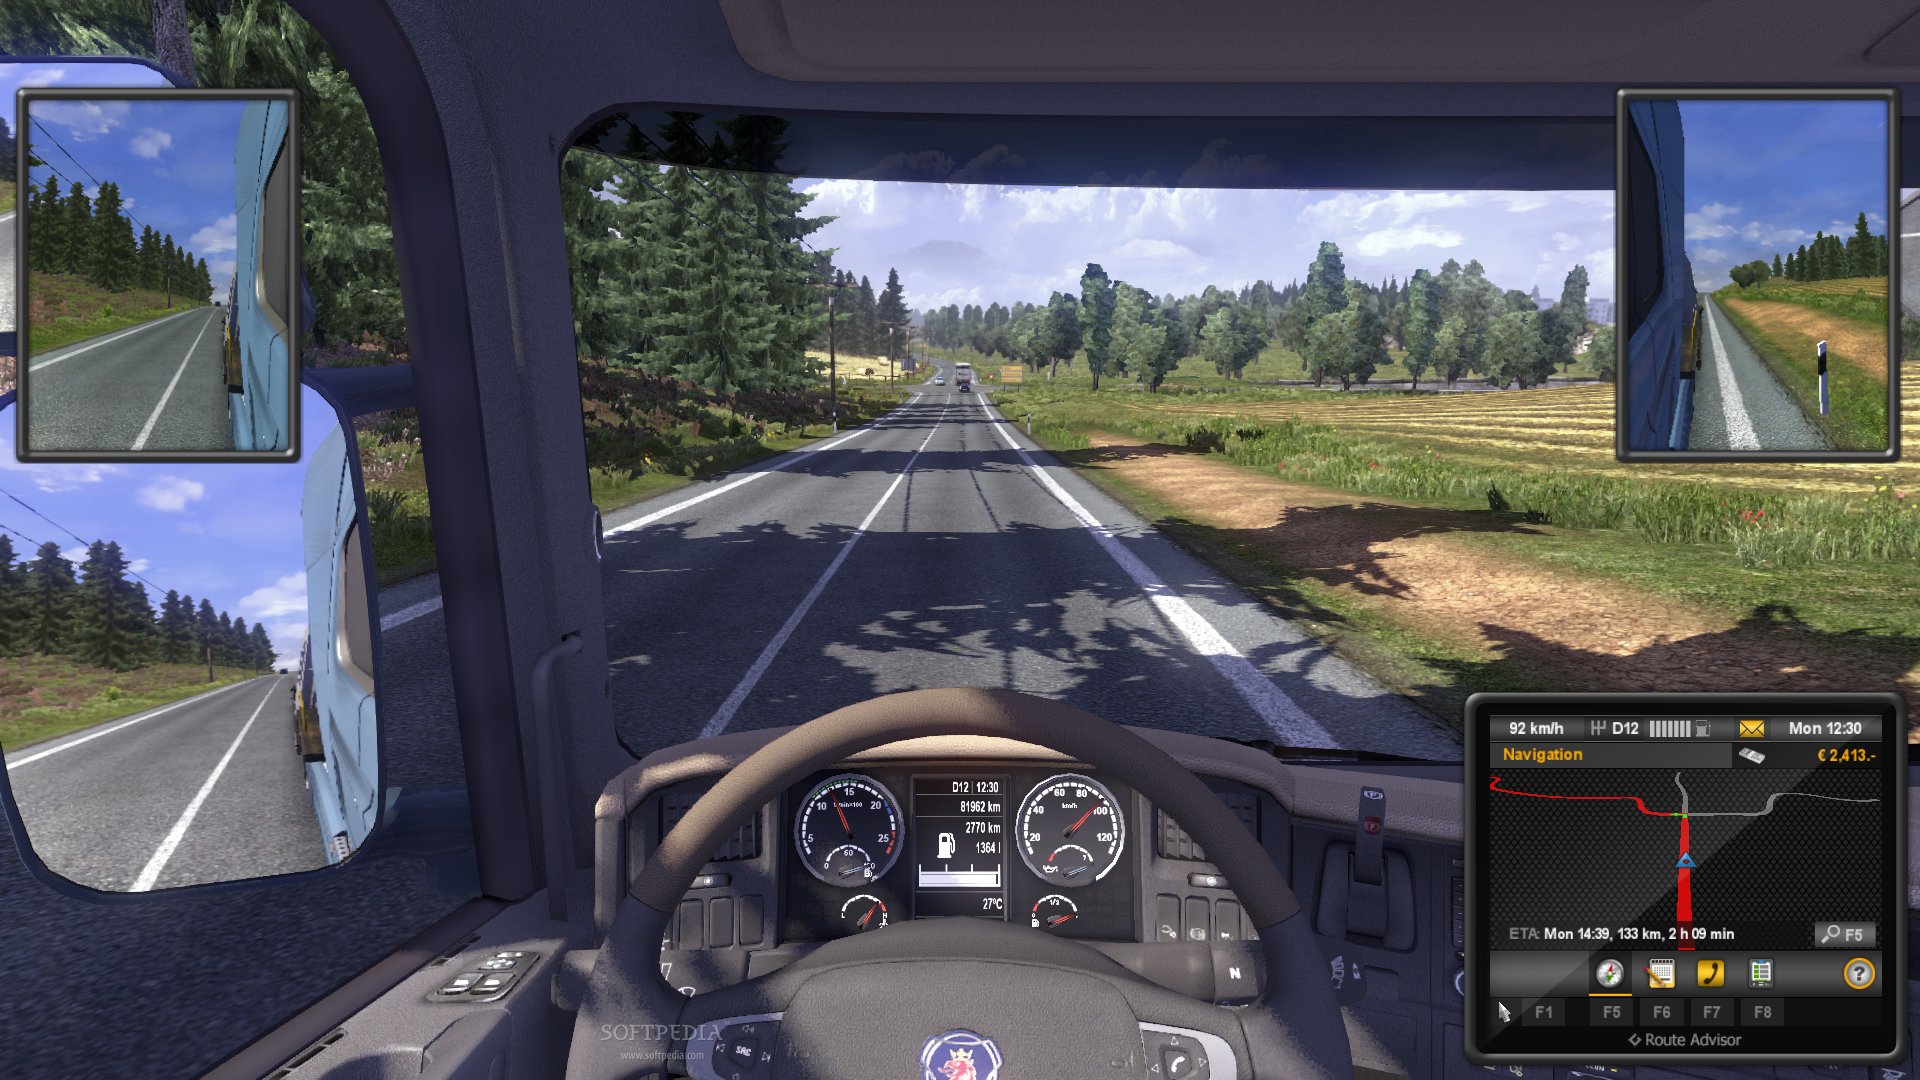 download free euro truck simulator 2 ps4